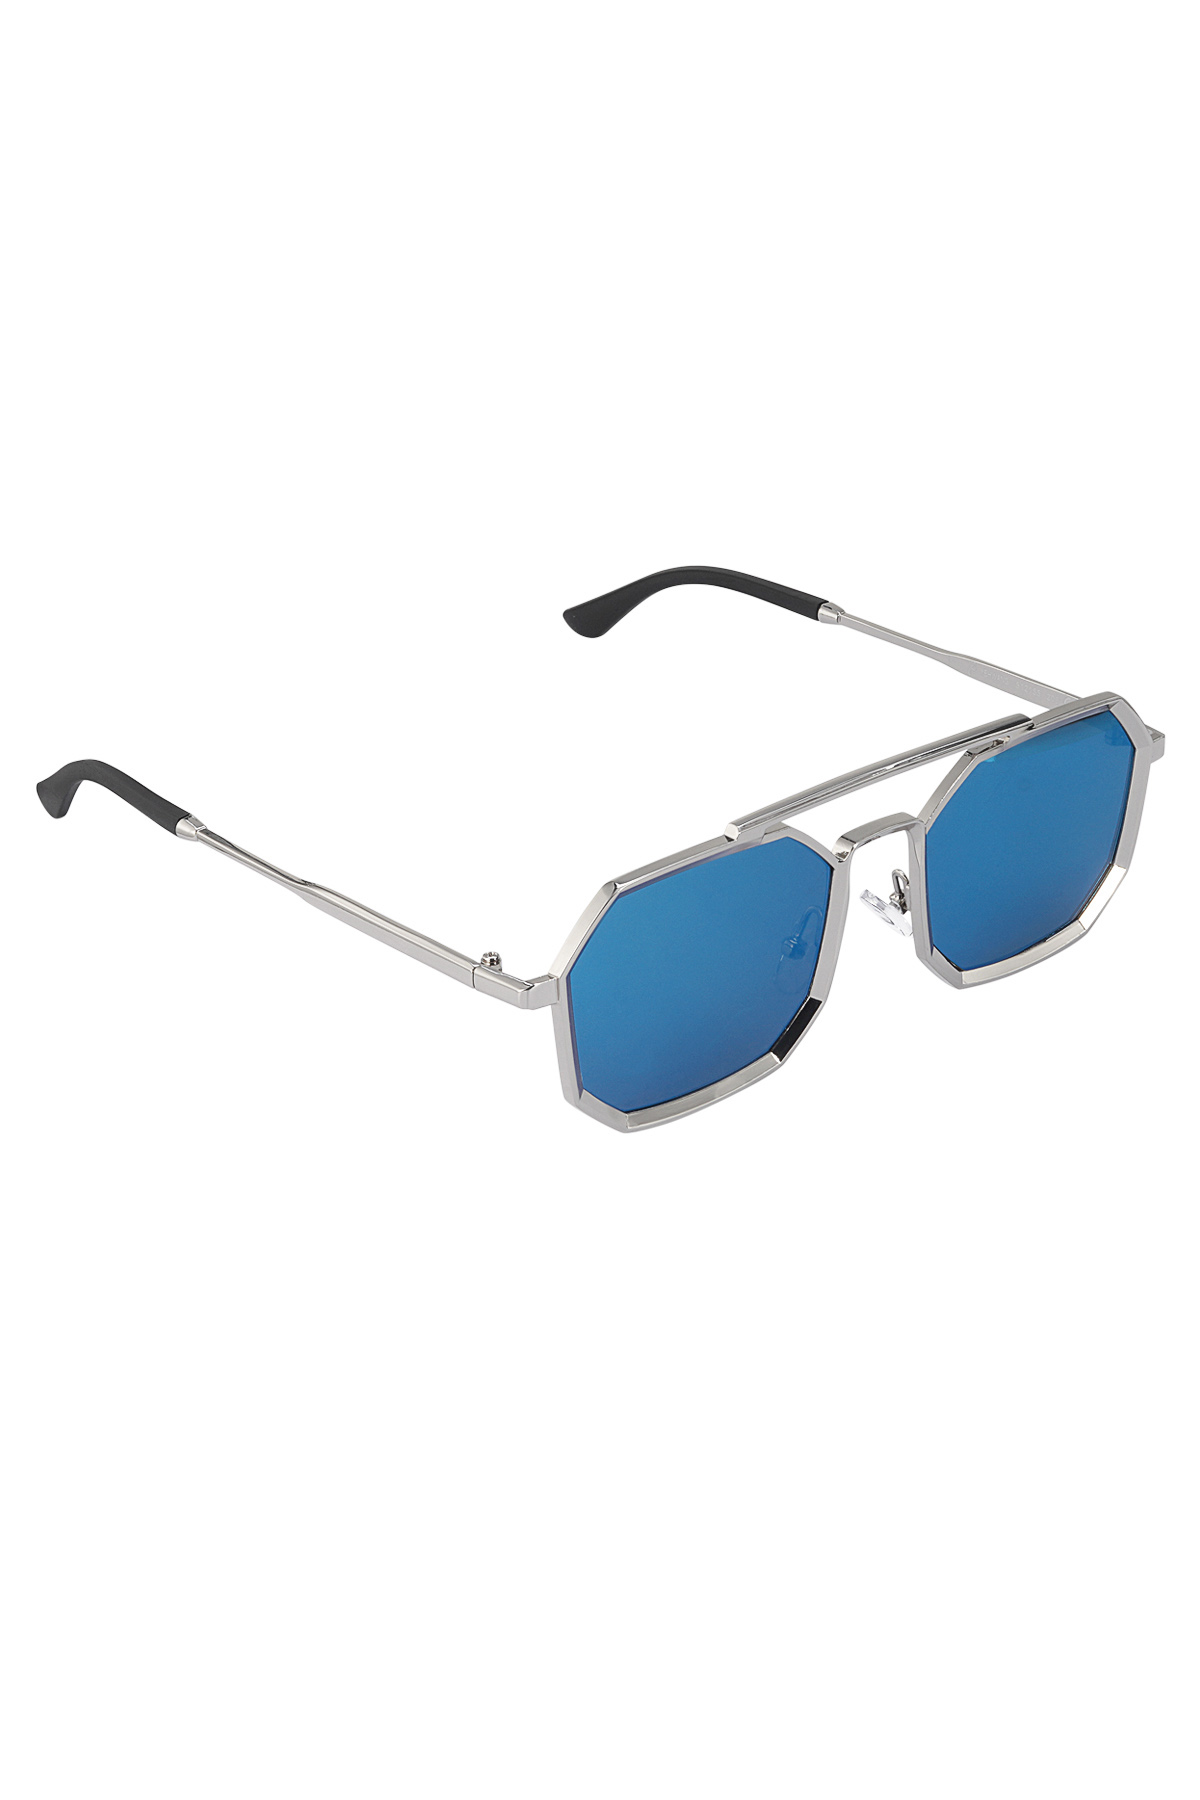 Sunglasses LuminLens - blue silver h5 